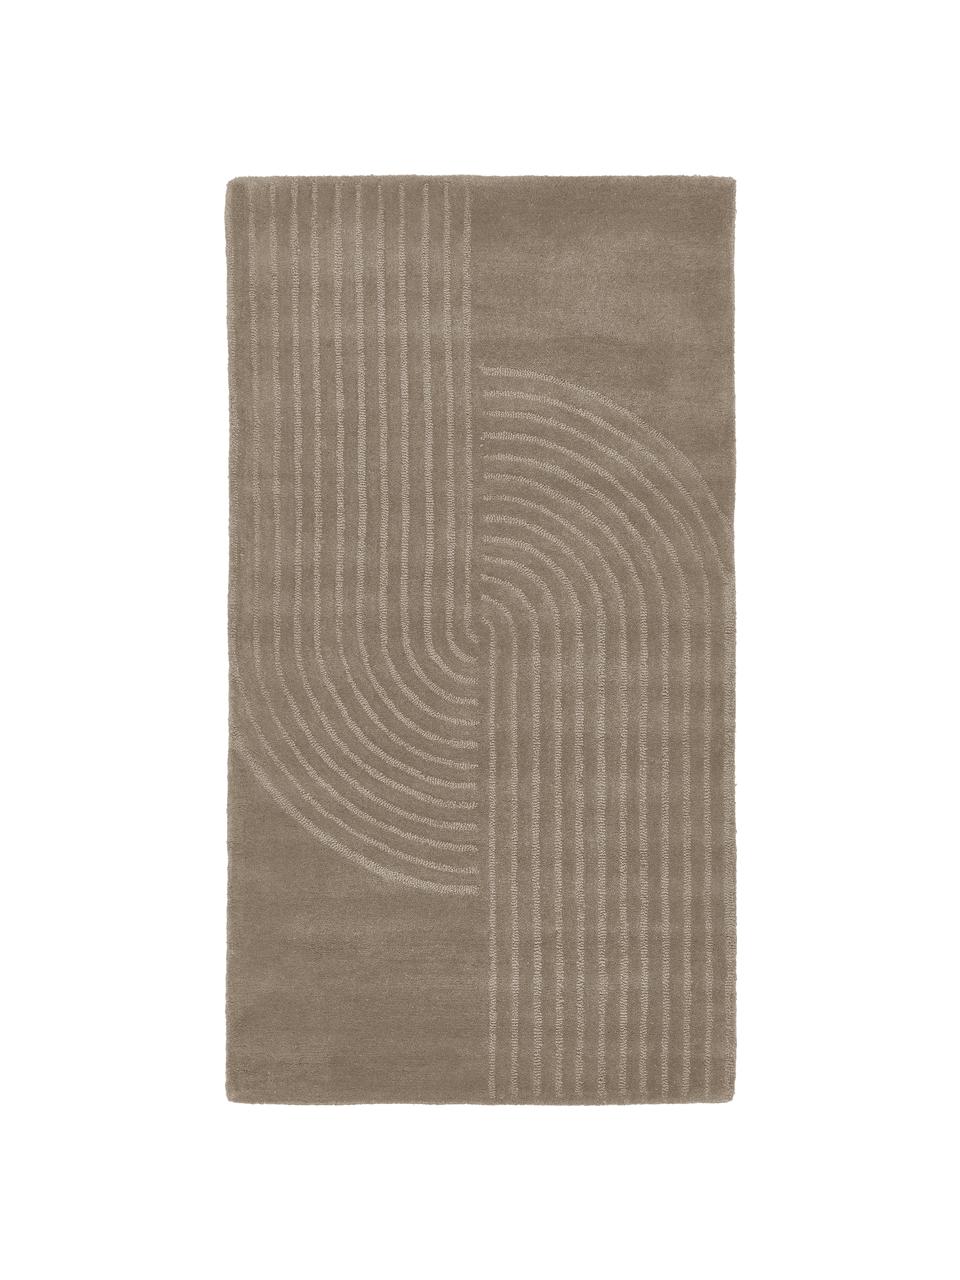 Tapis laine taupe tufté main Mason, Taupe, larg. 80 x long. 150 cm (taille XS)